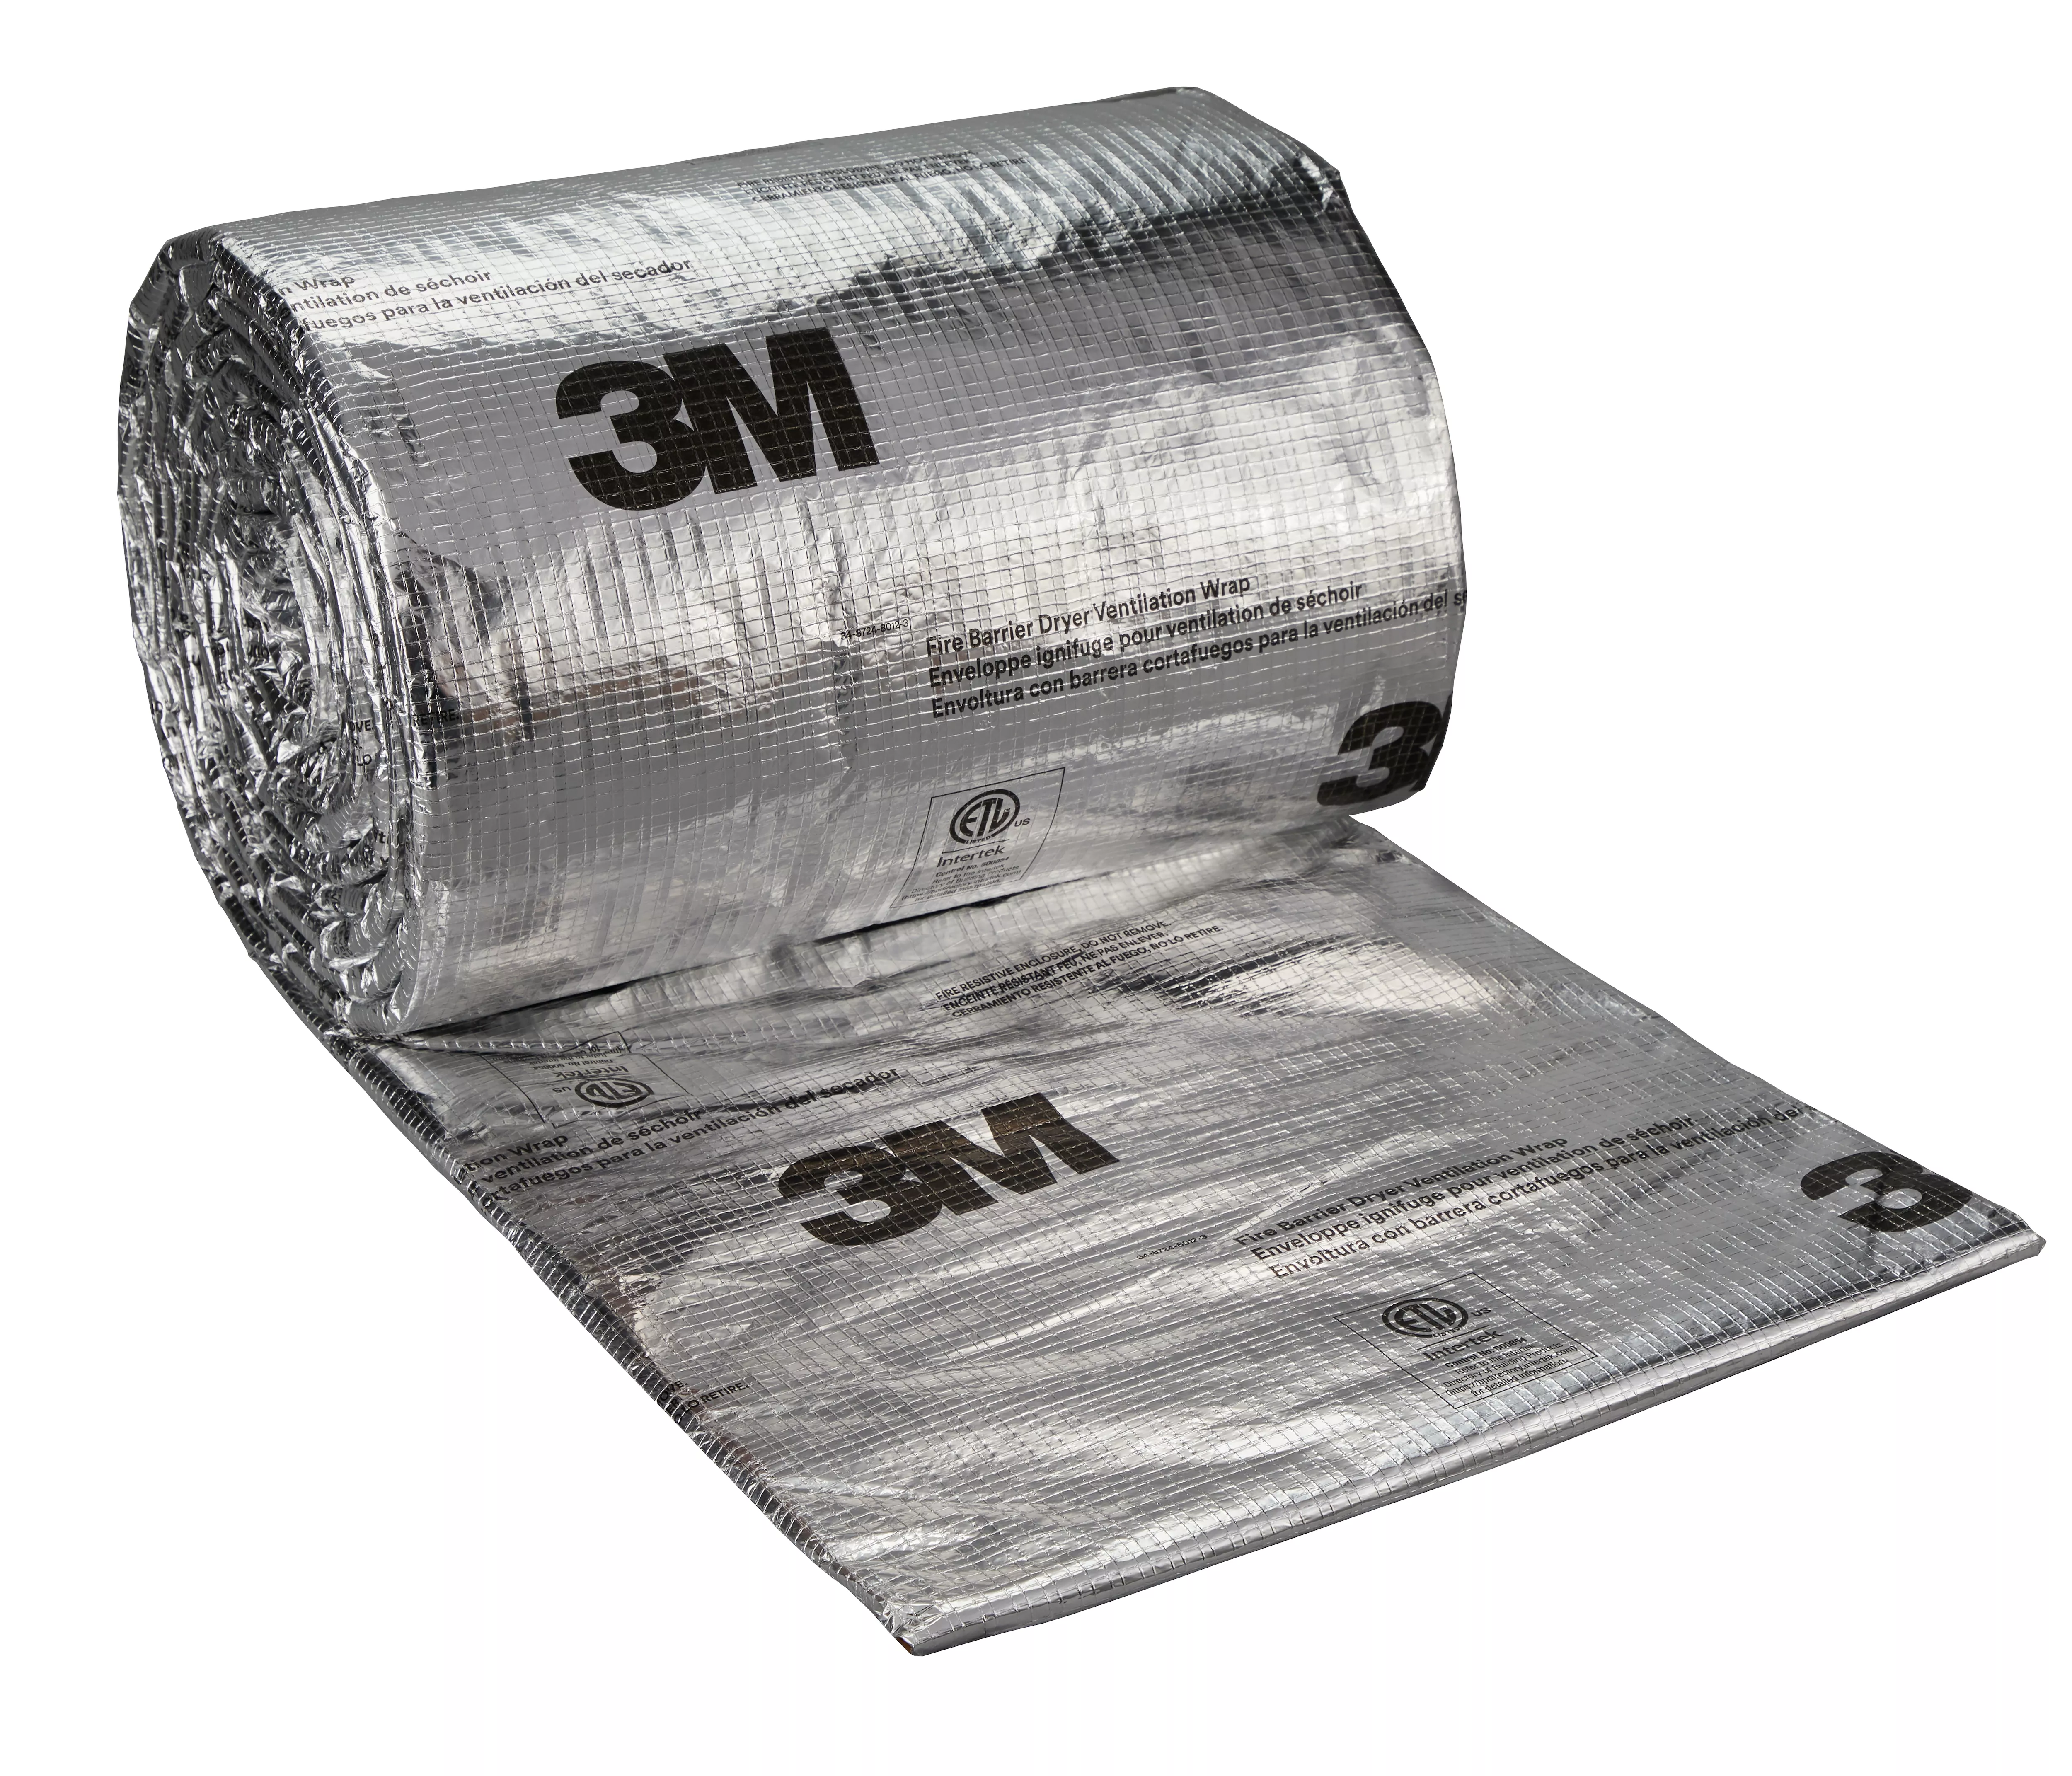 SKU 7100216834 | 3M™ Fire Barrier Dryer Ventilation Wrap DVW20